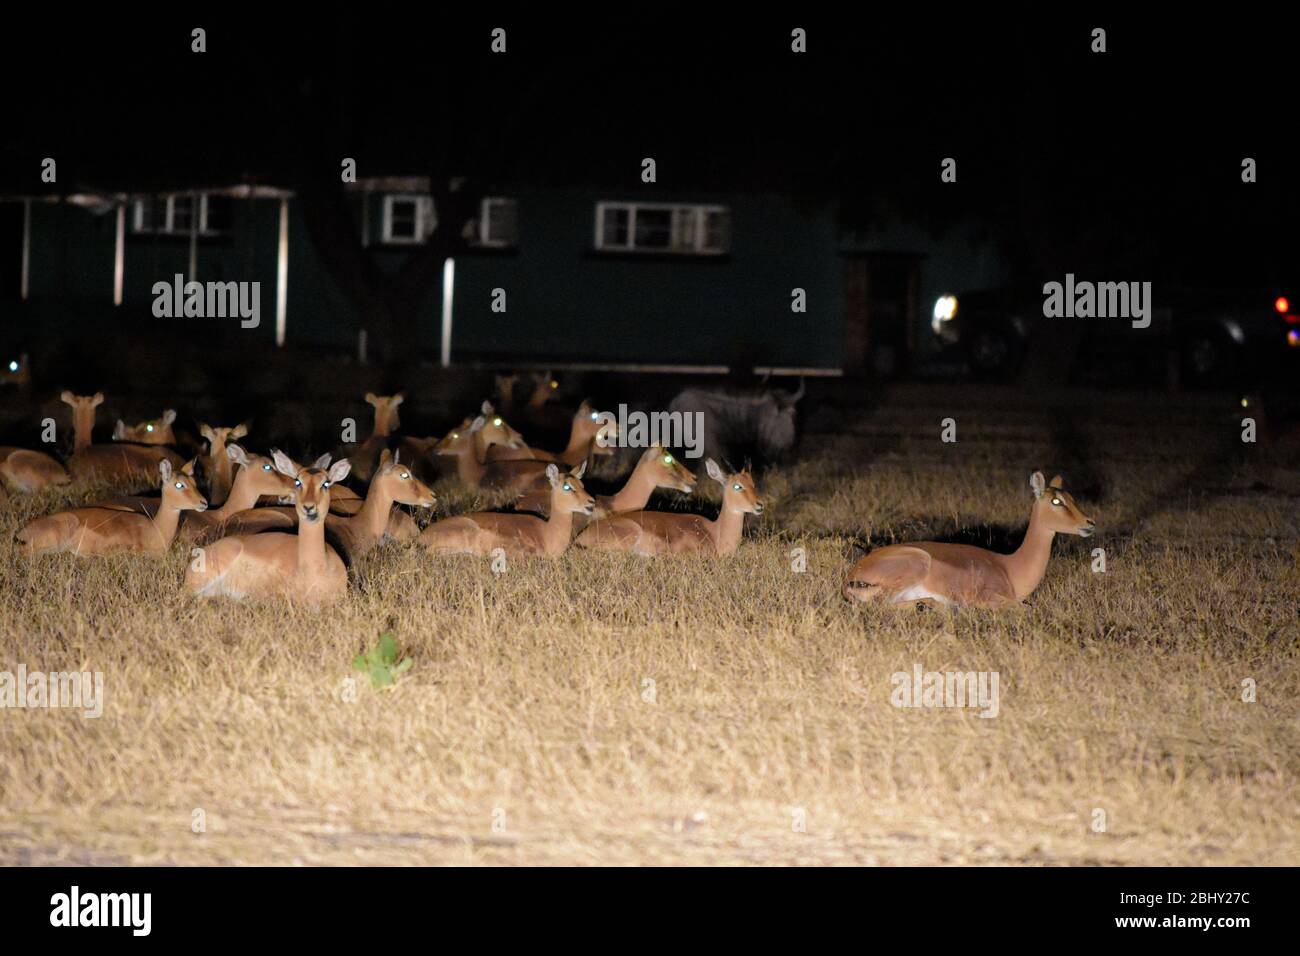 Herd of impala sleep close to human dwellings for safety. Zimbabwe, Africa Stock Photo